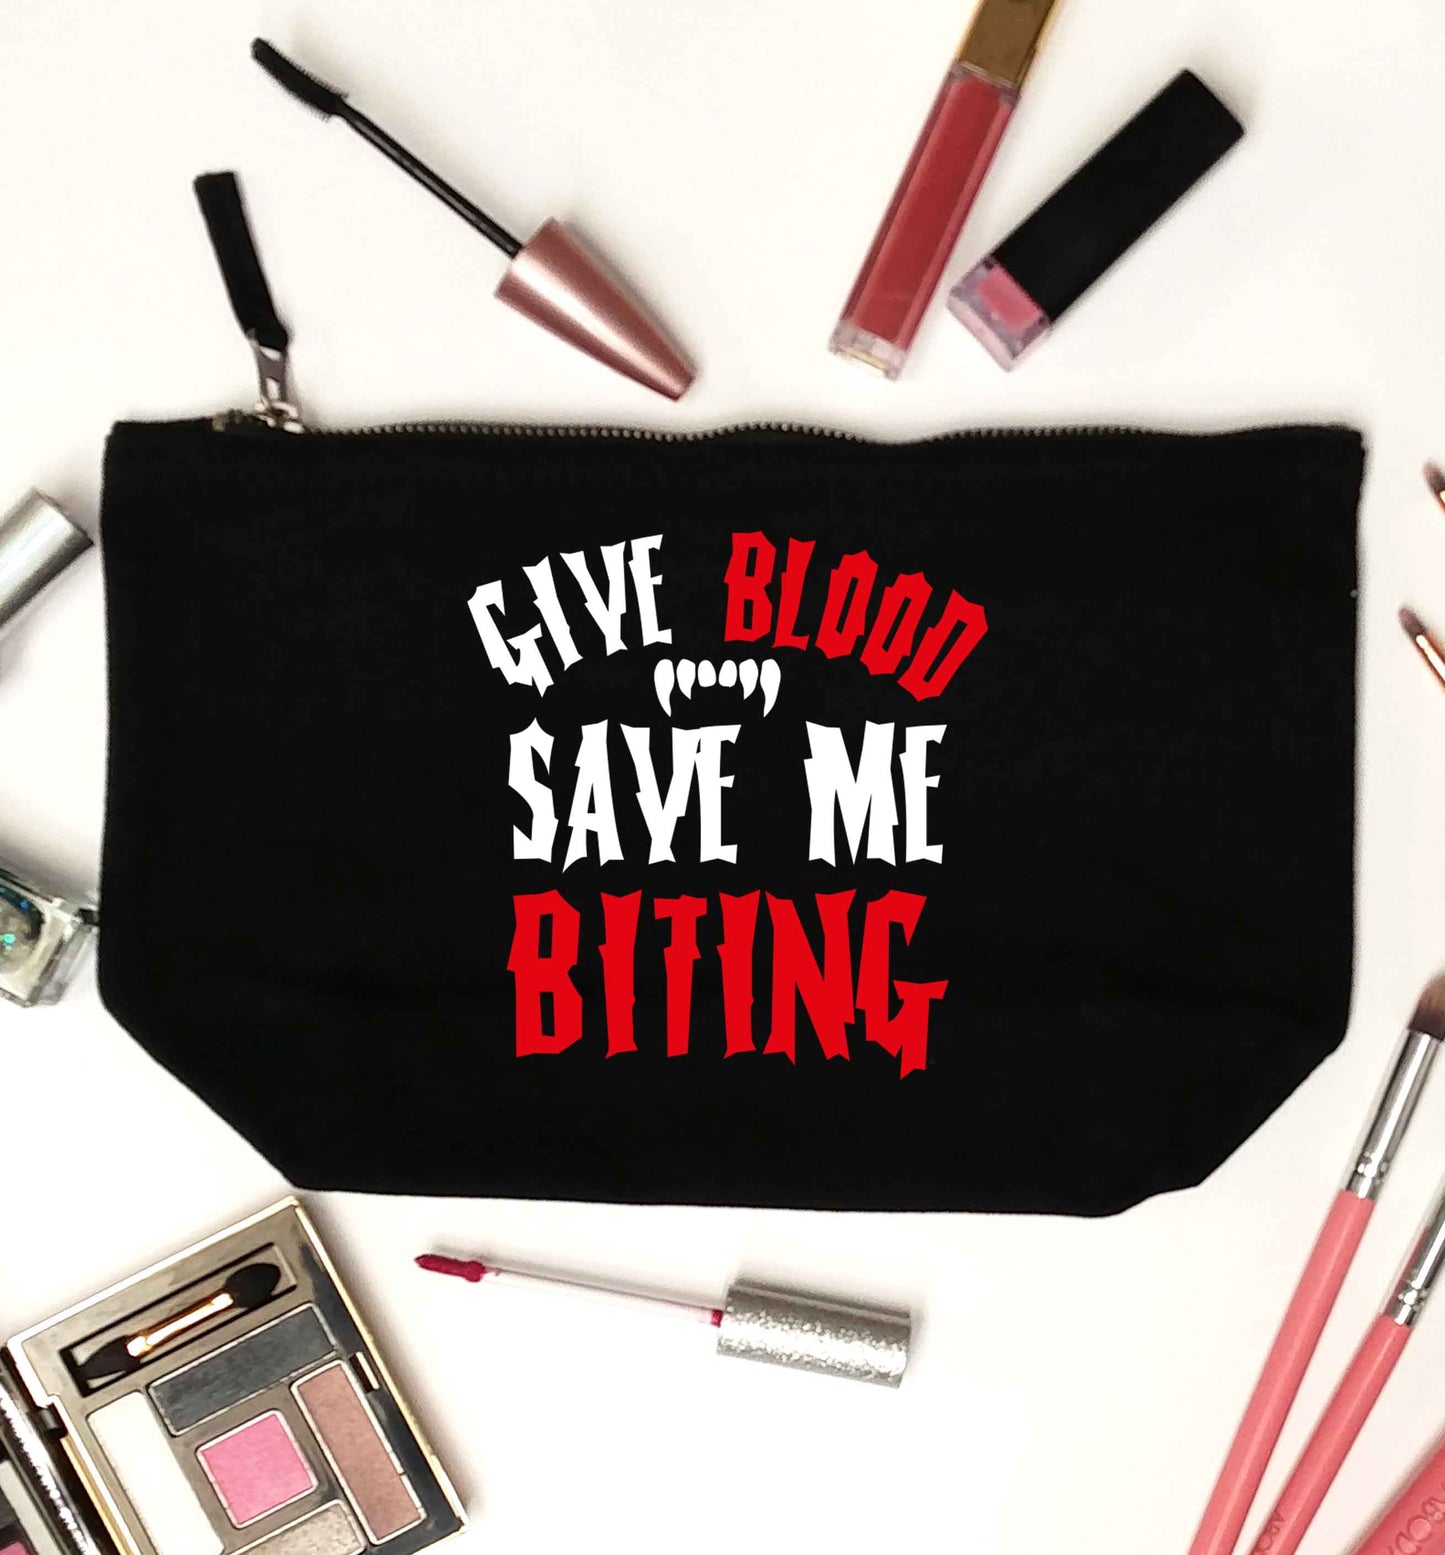 Give blood save me biting black makeup bag